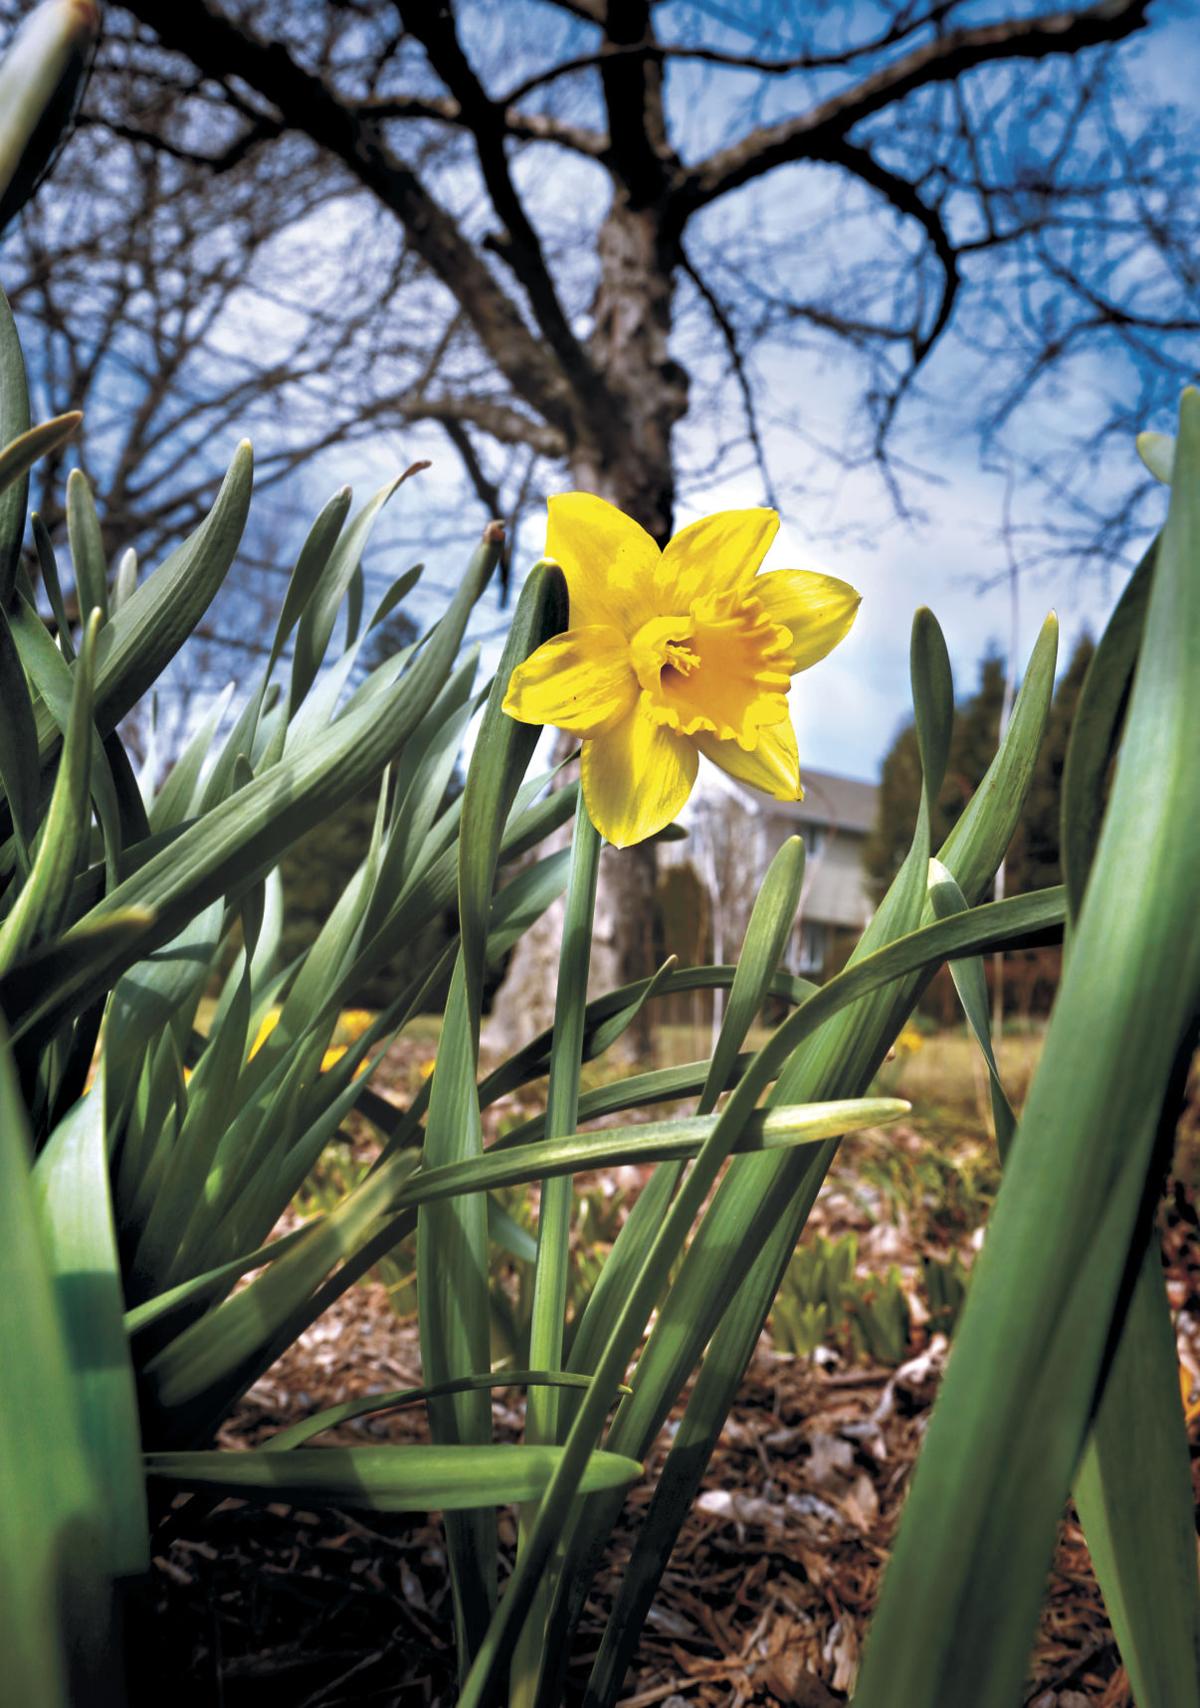 Signs of Spring | News | winchesterstar.com